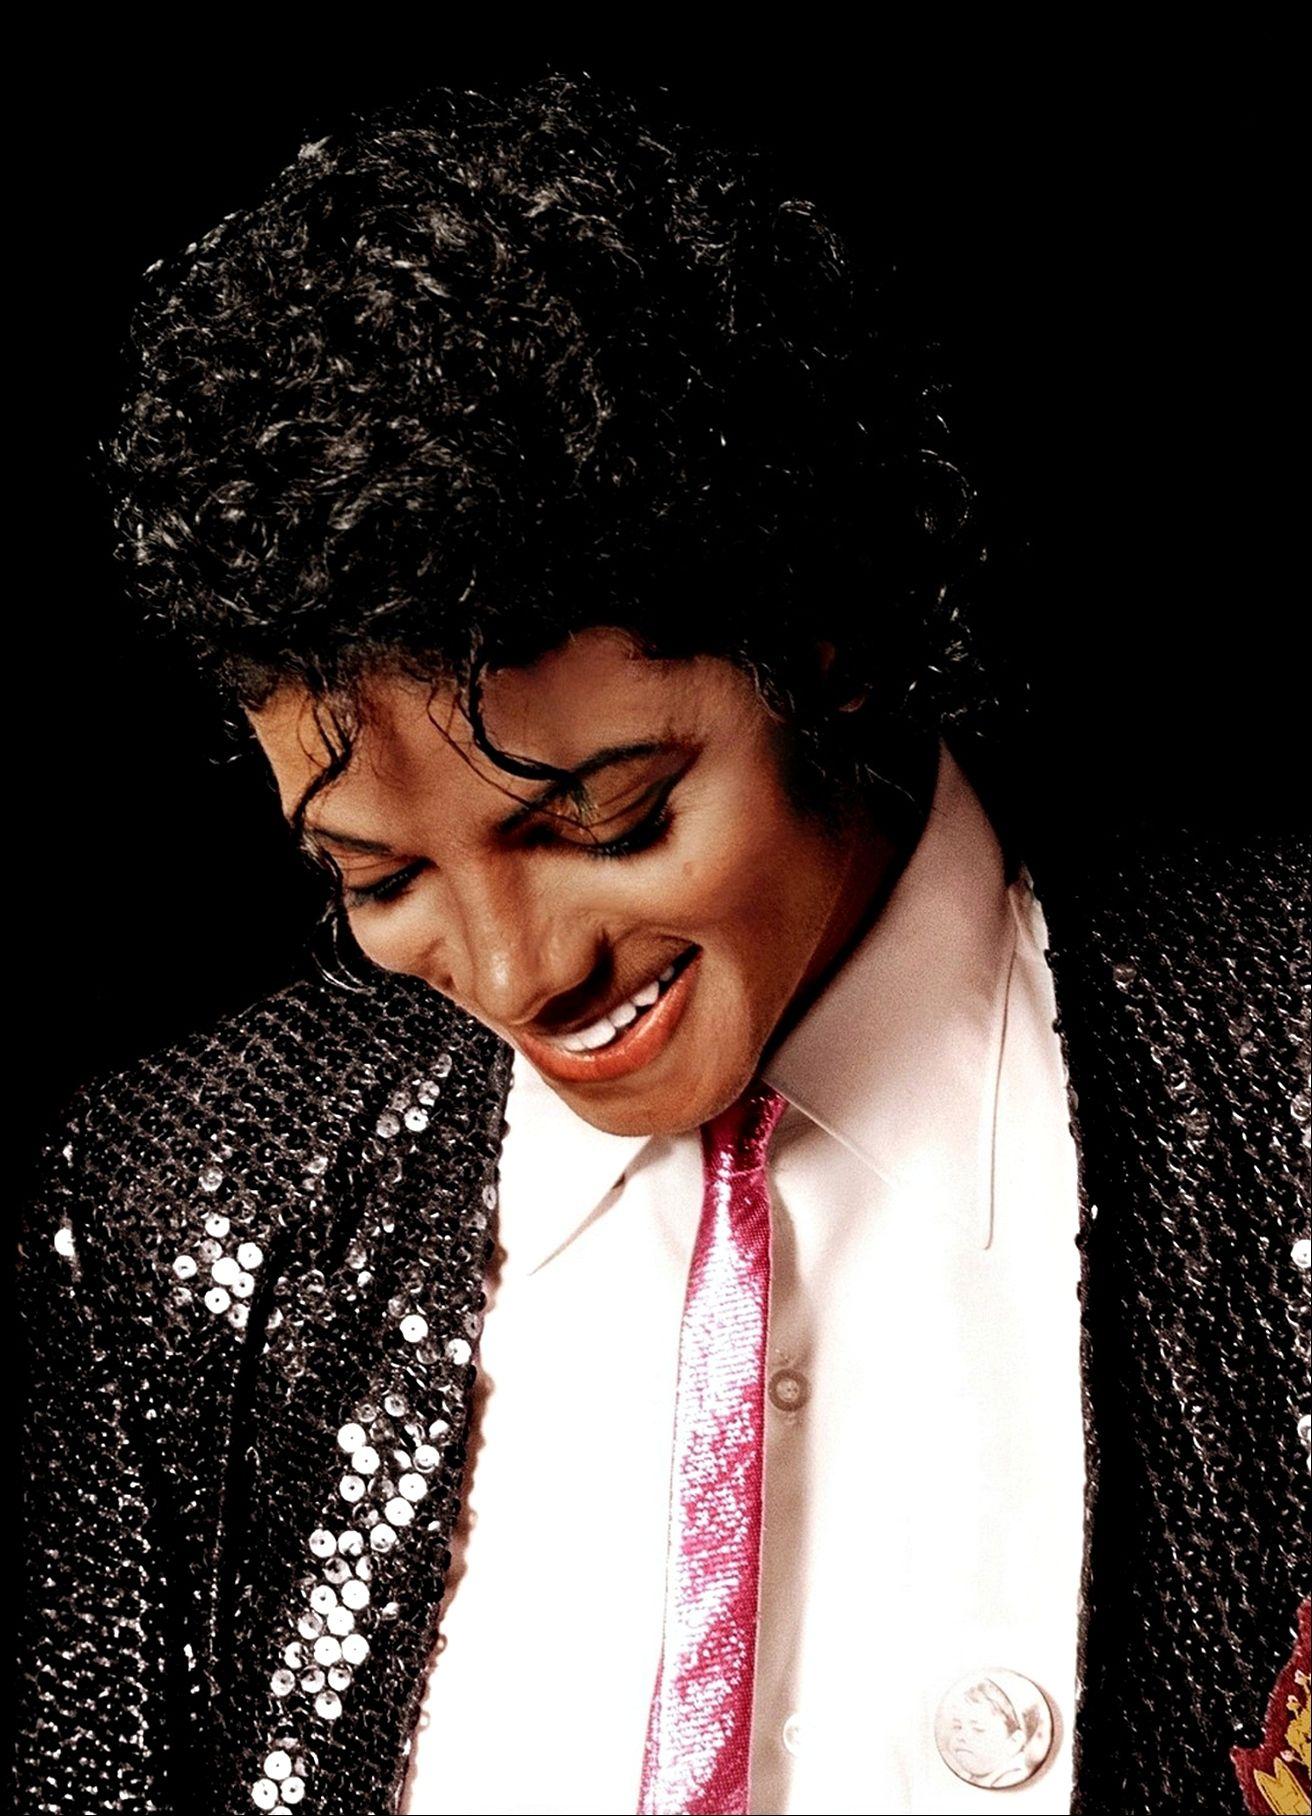 Michael Jackson photo gallery quality pics of Michael Jackson